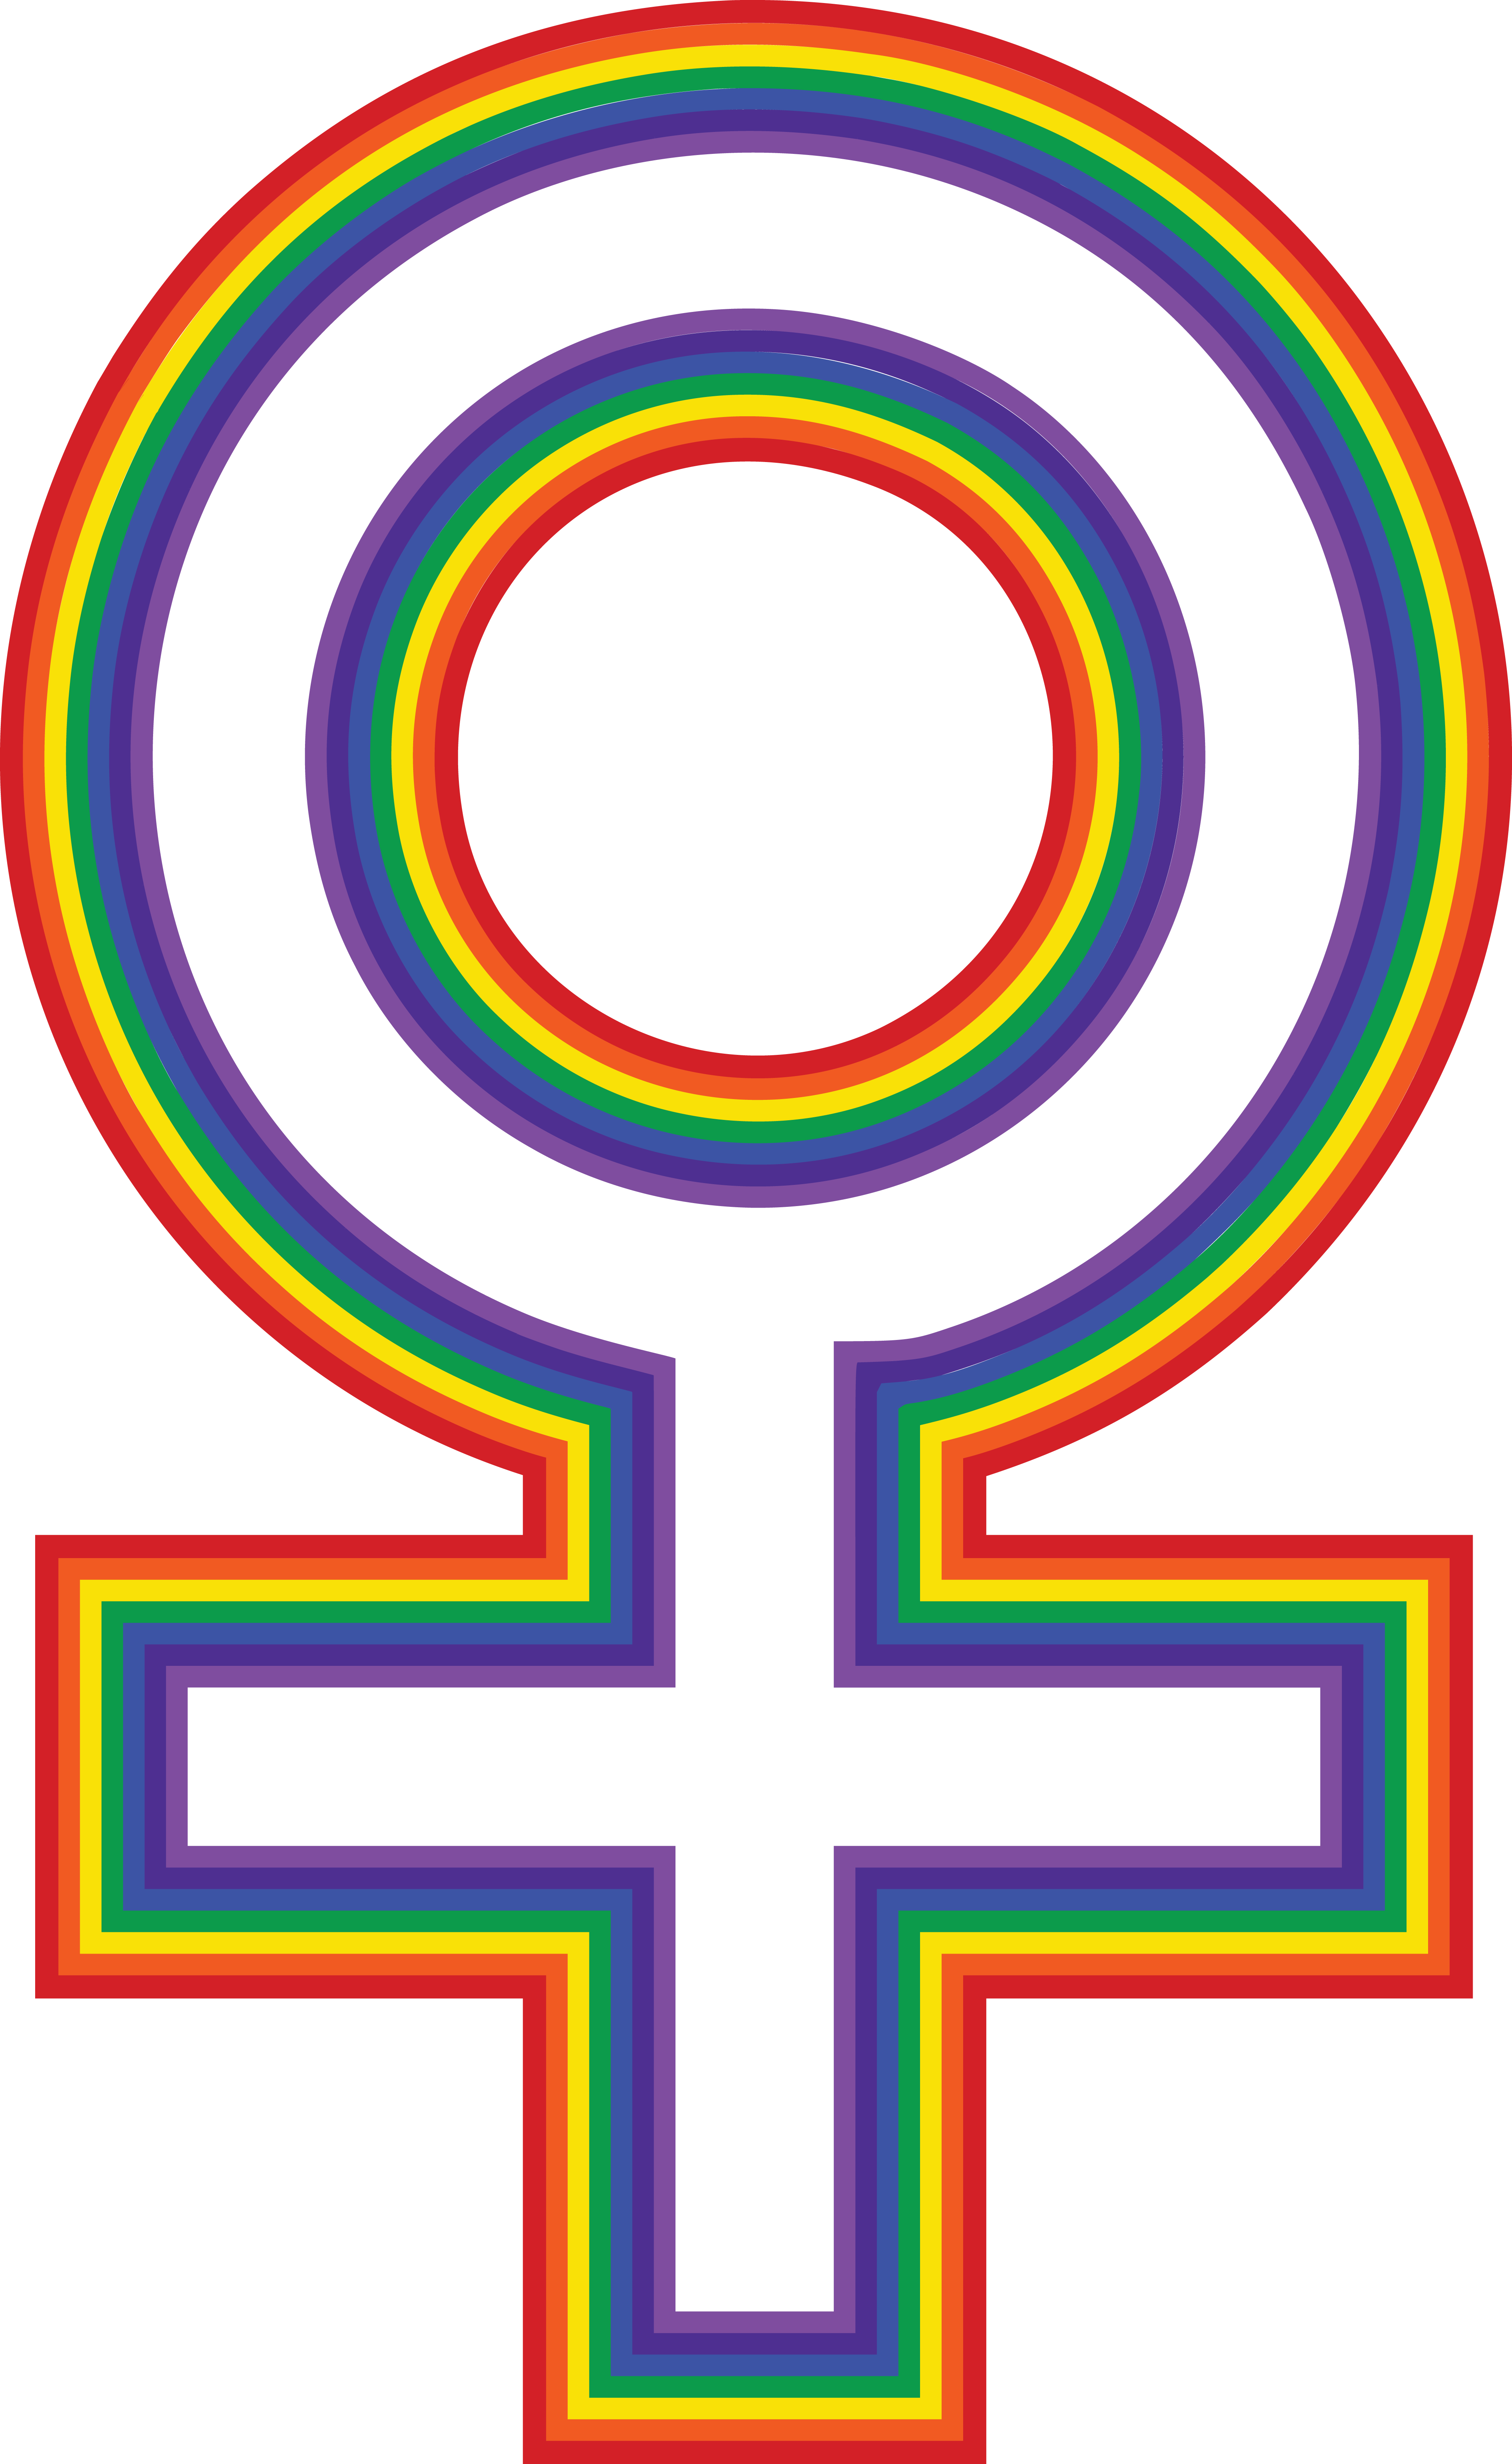 Free Clipart Of A Rainbow Female Gender Symbol Gender Symbol Png Download Large Size Png